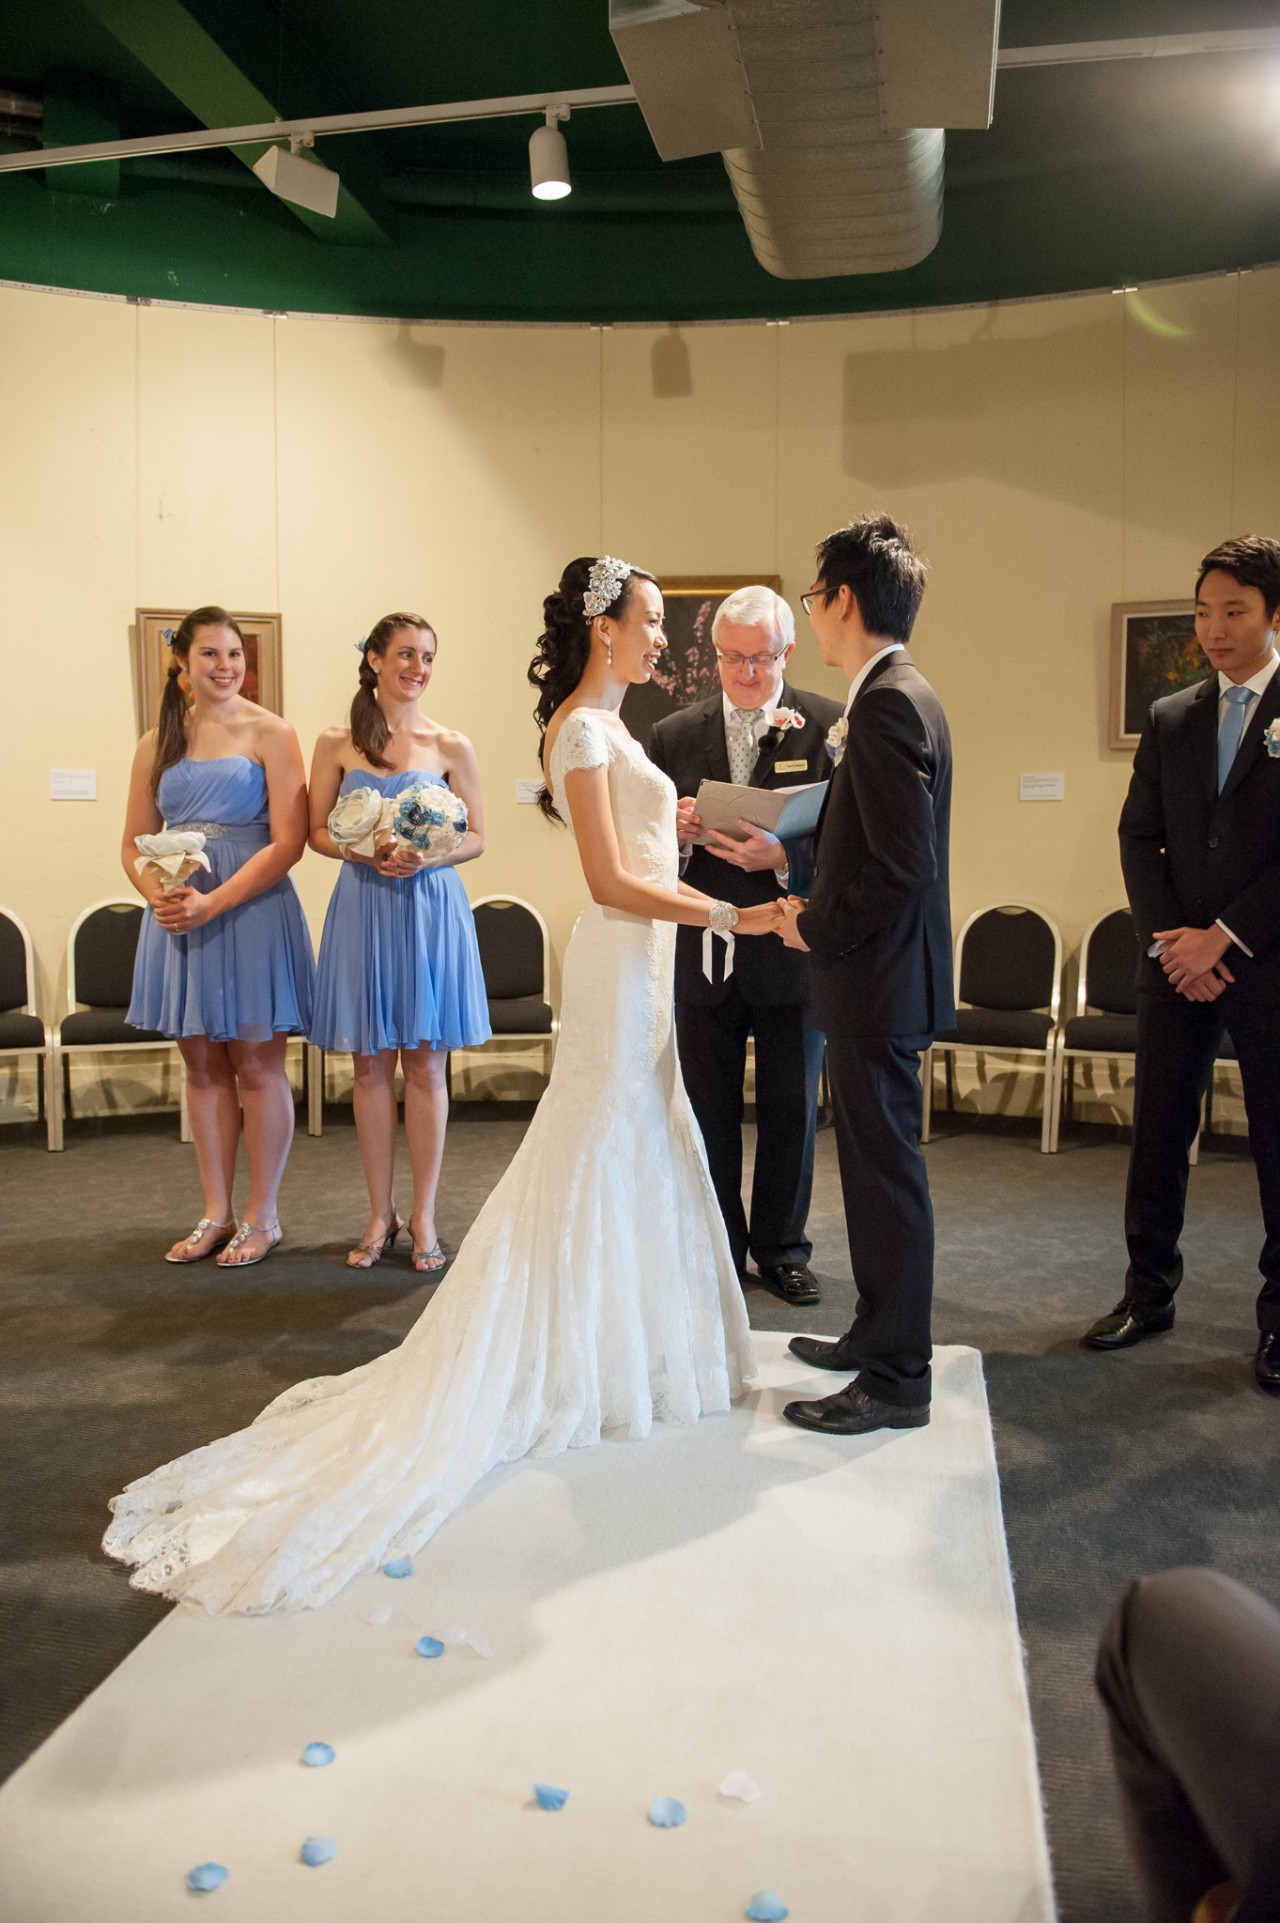 Tish and Jun's Wedding Ceremony at Brisbane Customs House